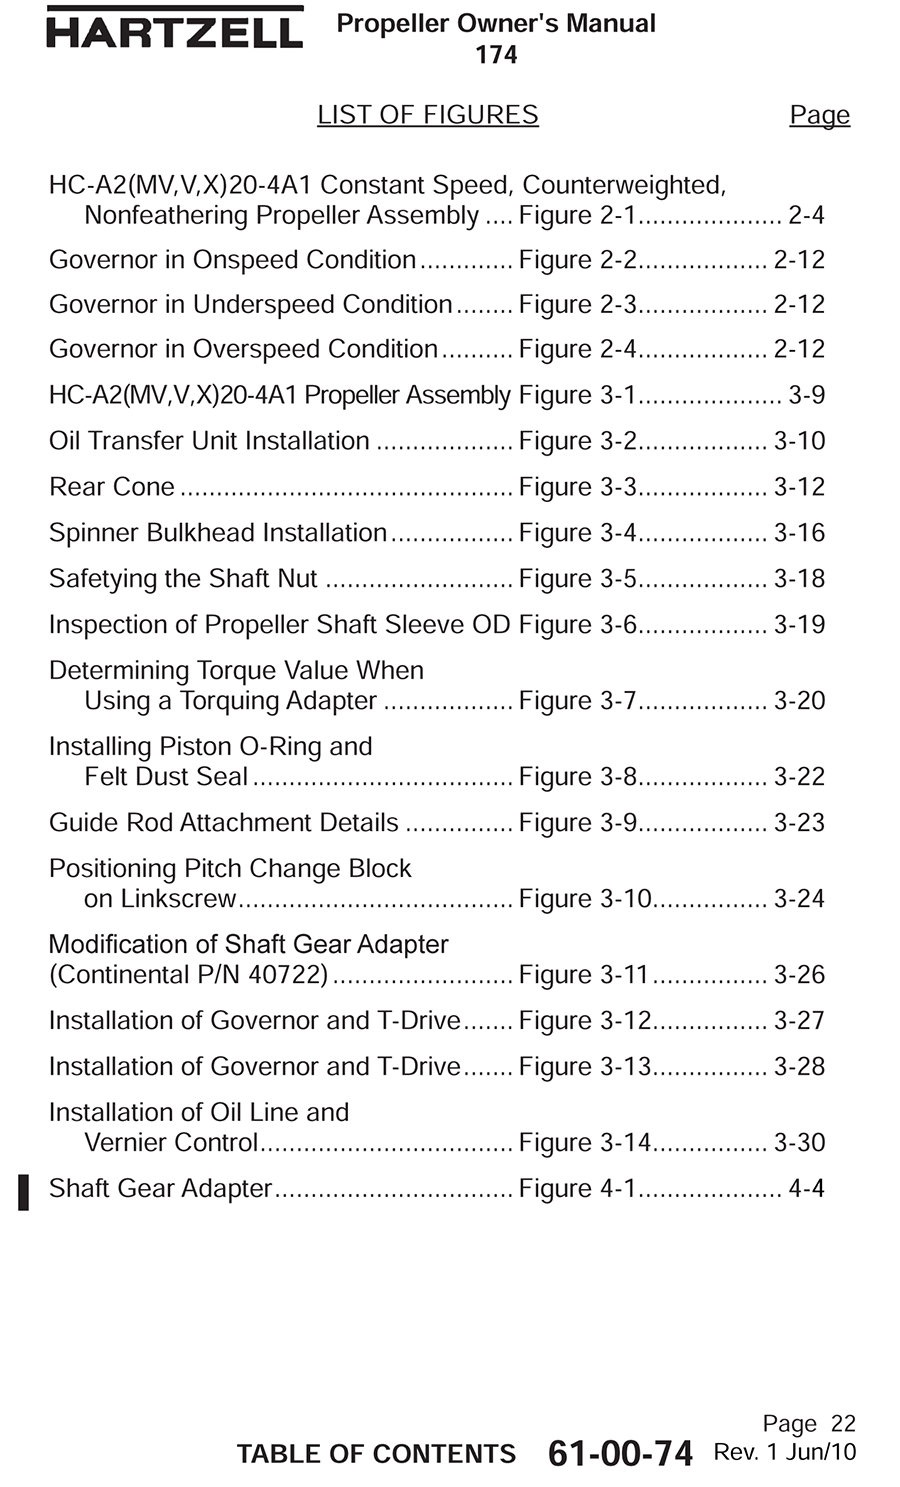 Hartzell Prop Manual 2010 page24